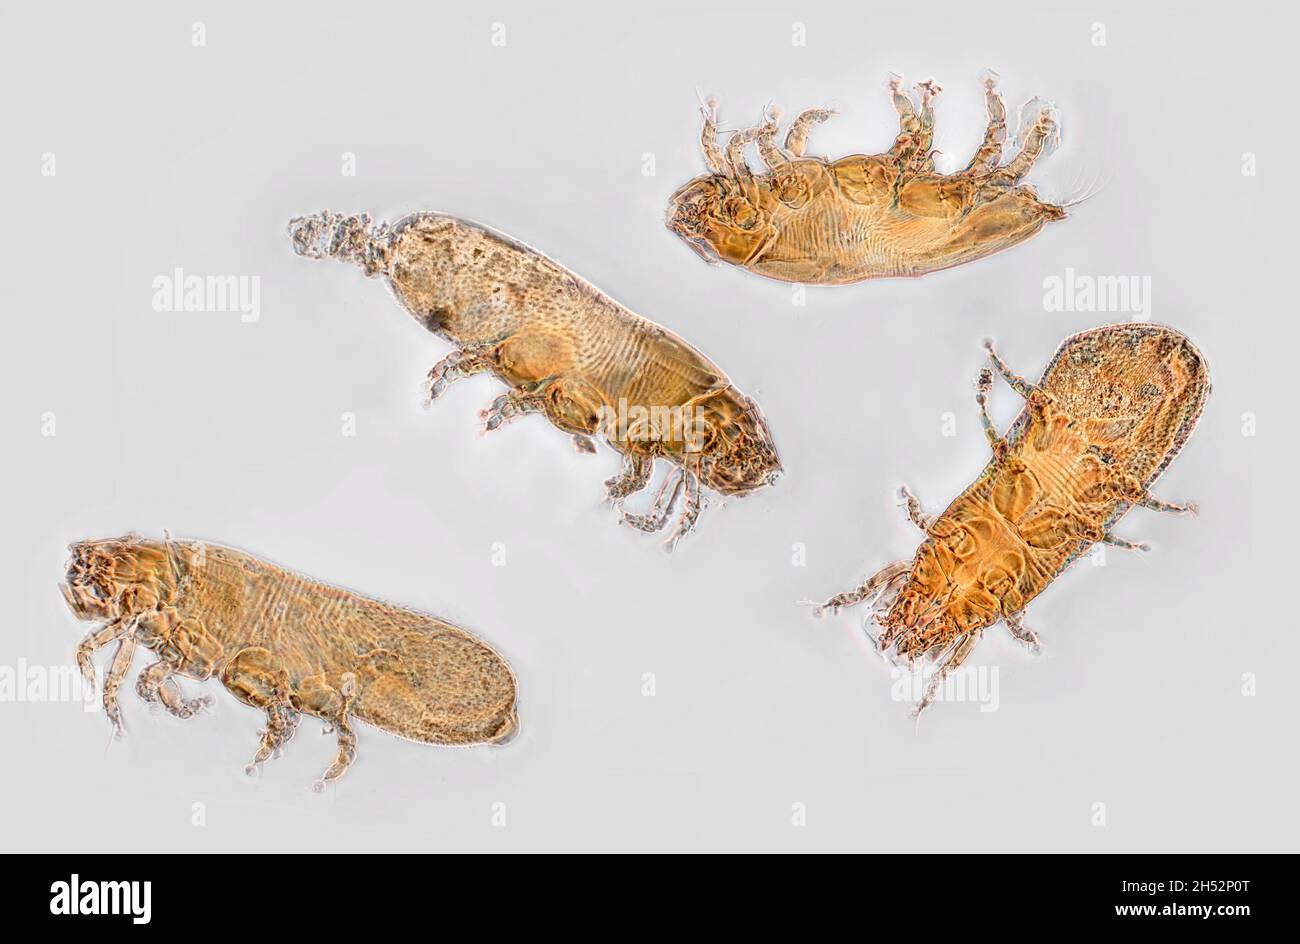 Acari mites from a rat. Phase contrast illumination, photomicrograph Stock Photo